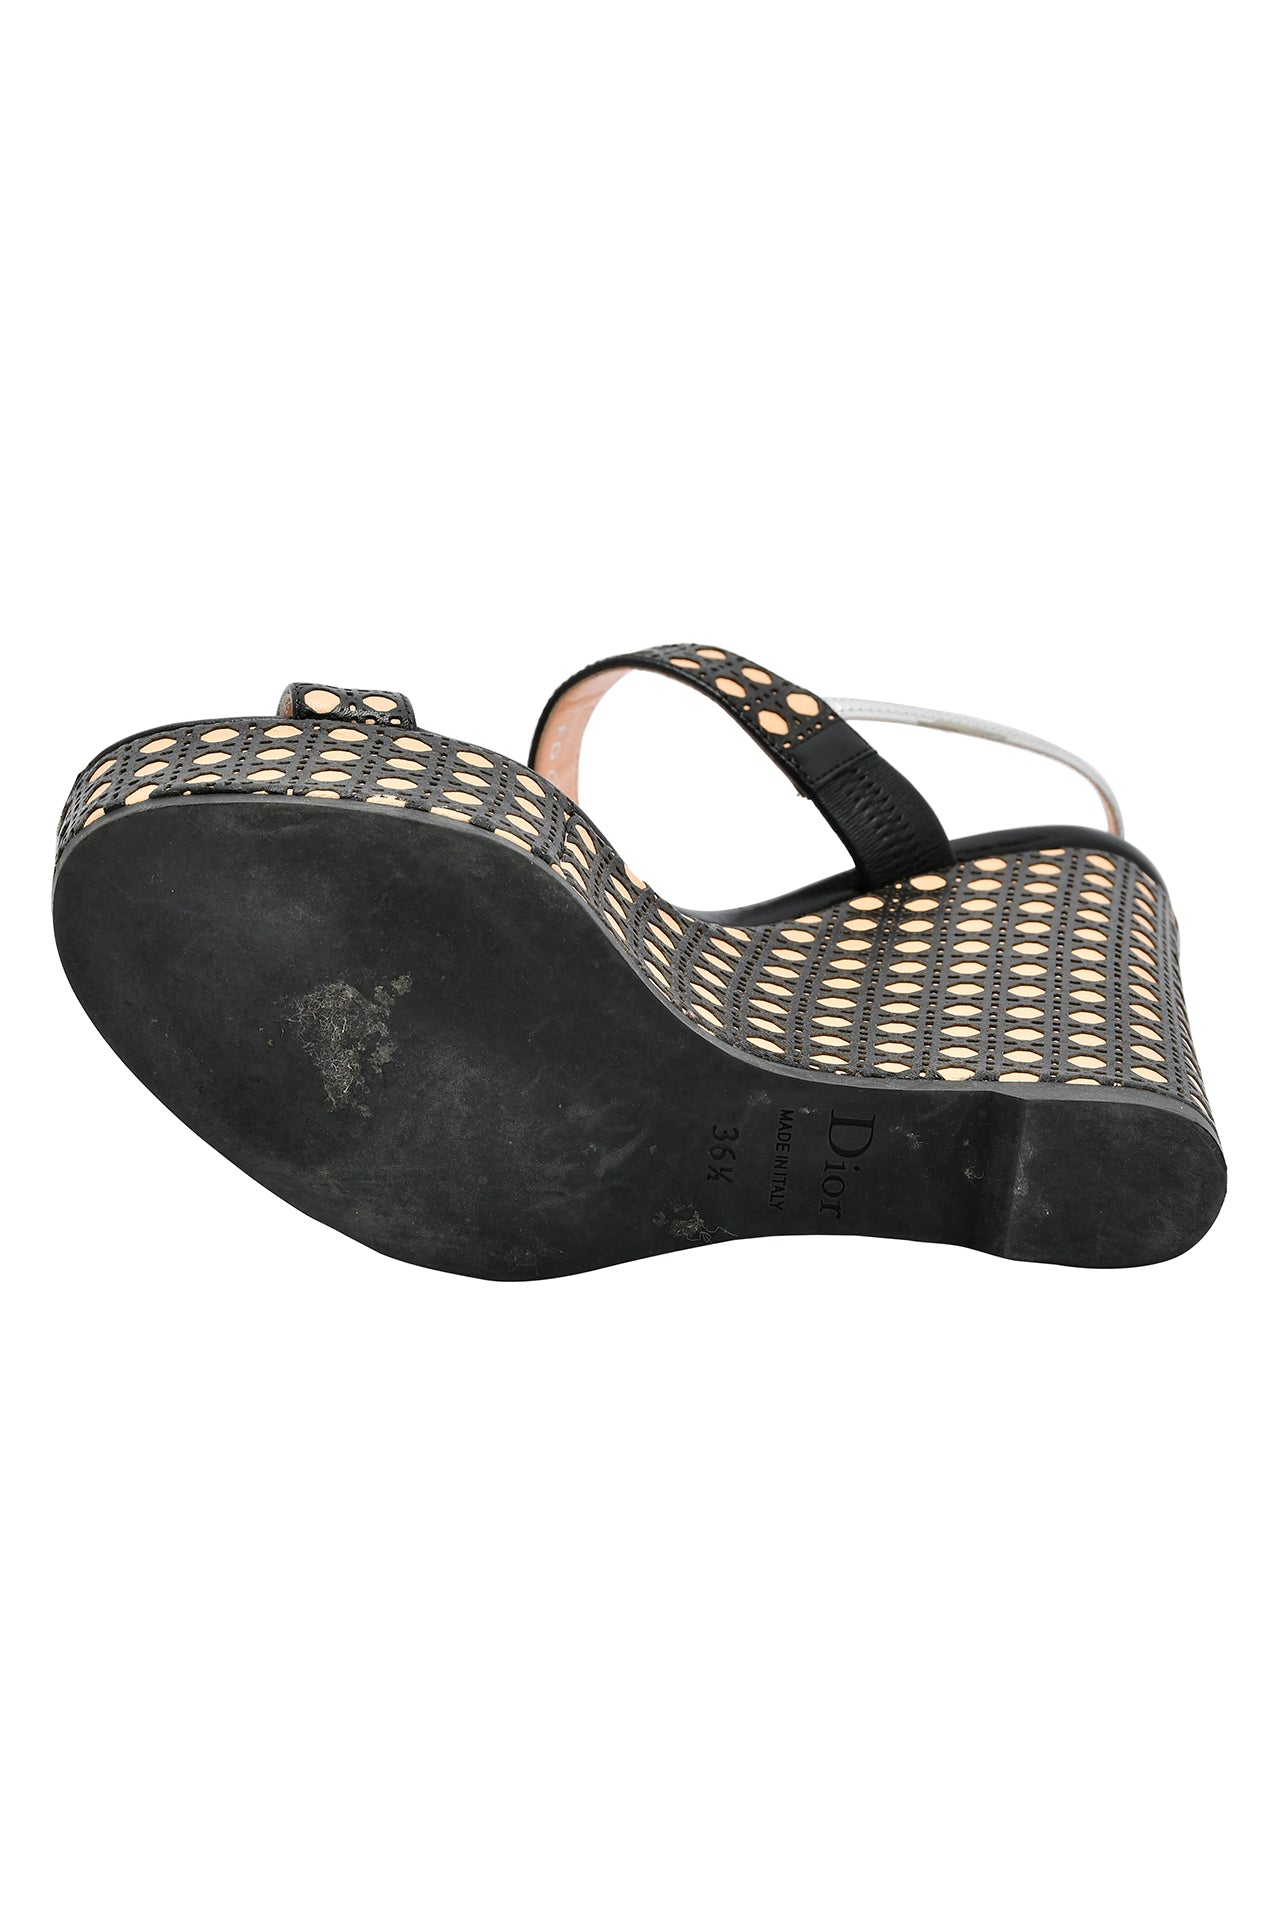 Dior Cannage Leather Wedge Platform Open Toe Sandals EU 36.5